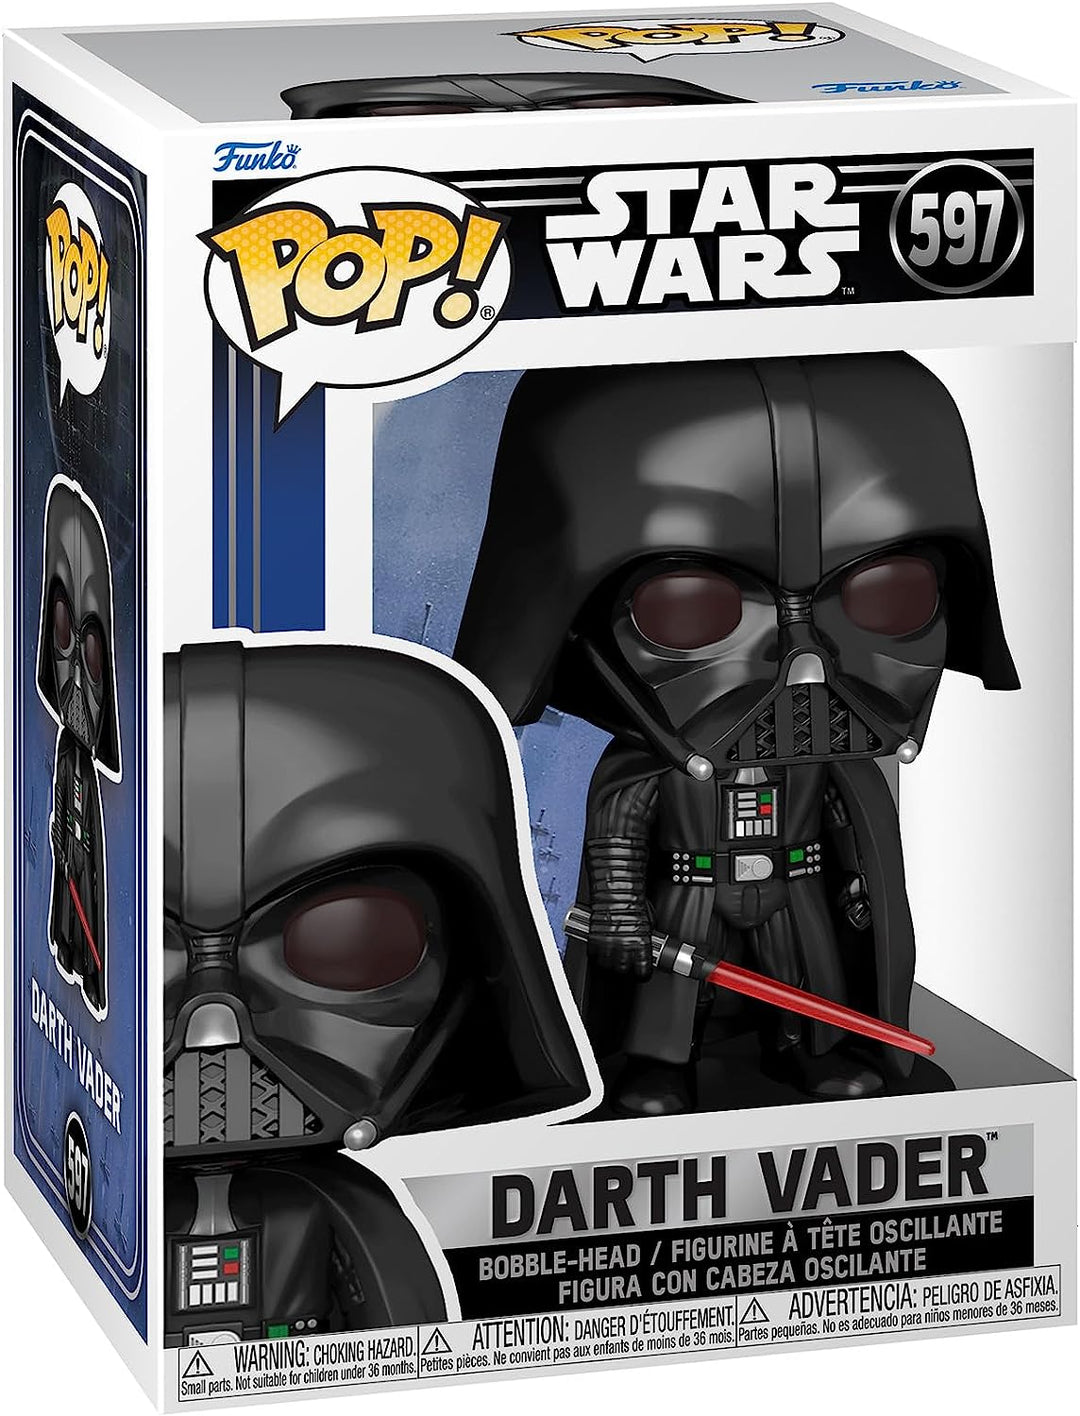 Star Wars Darth Vader Funko POP #597